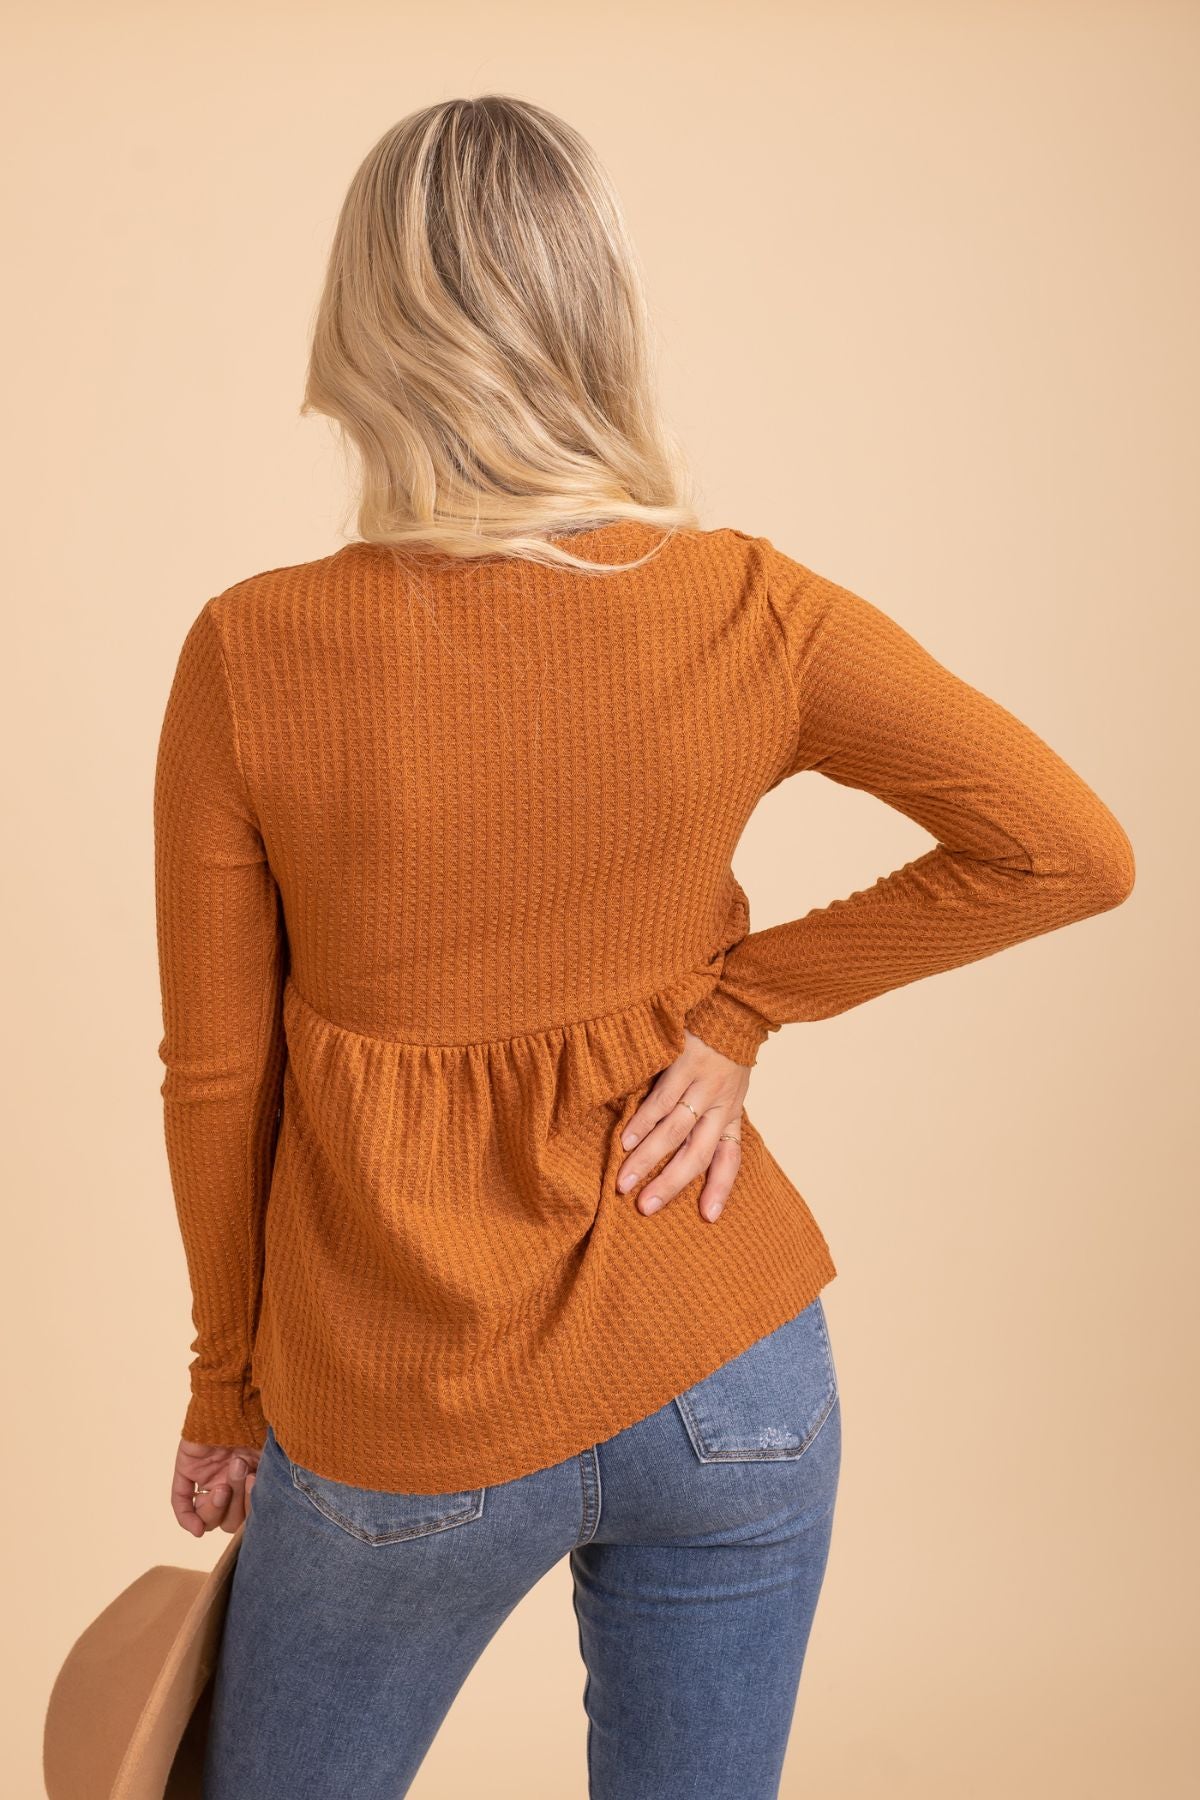 Light sweater orange top